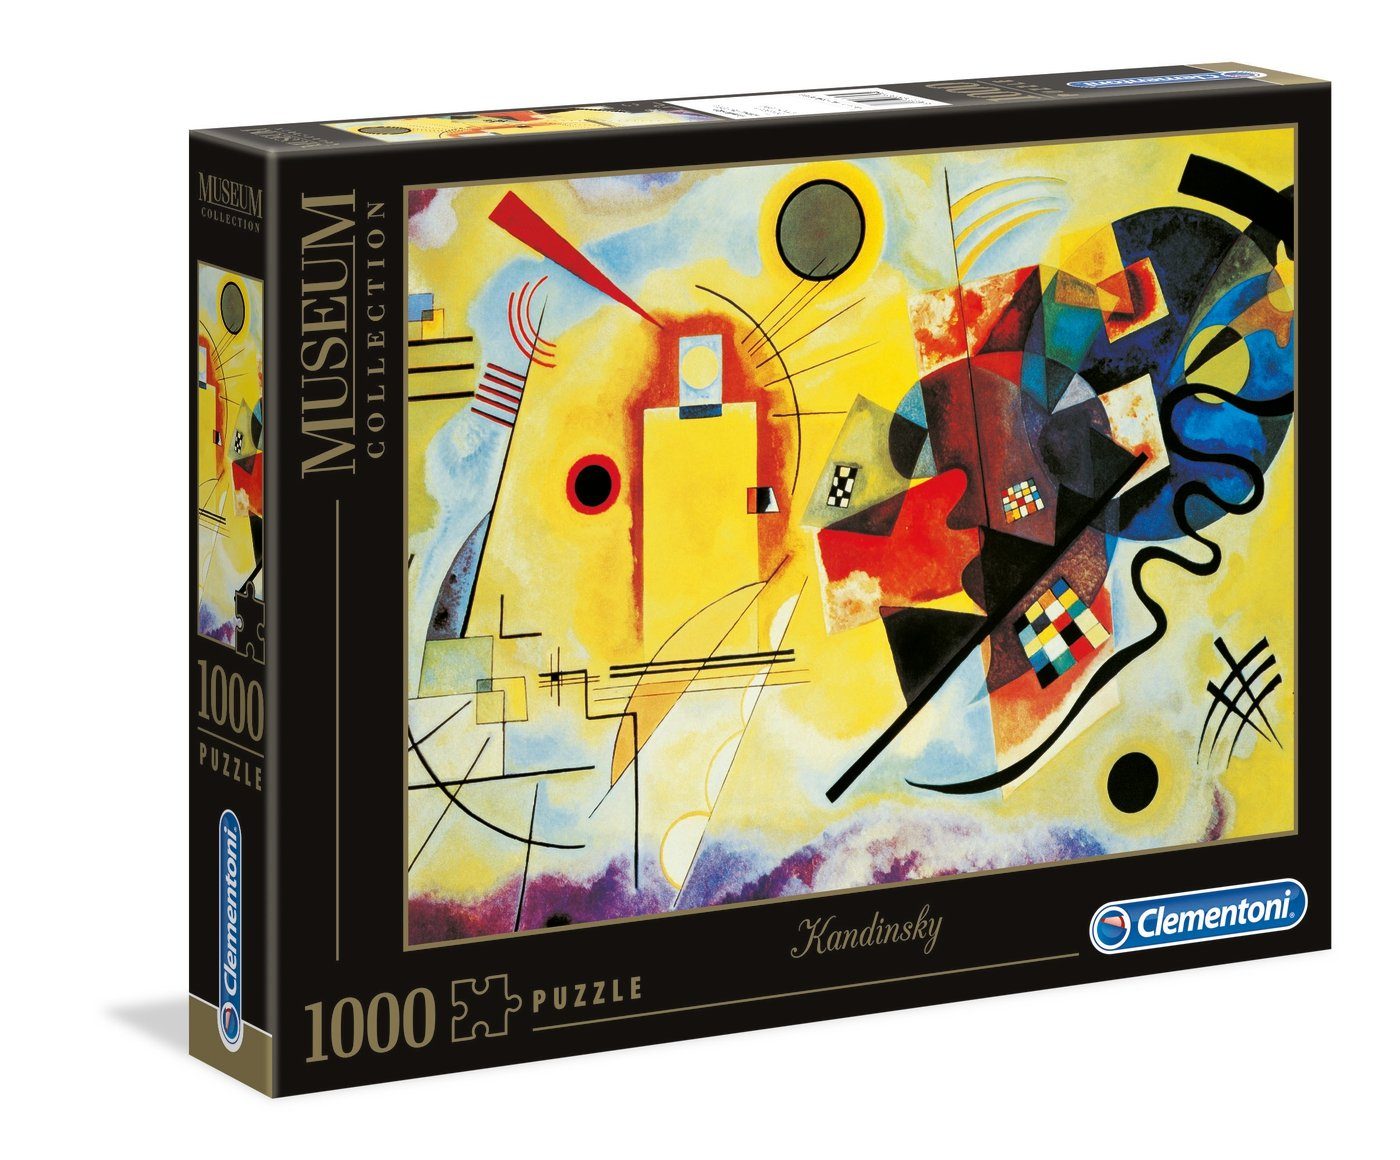 Clementoni Puzzle Museum Collection Kandinsky 1000 Stück 